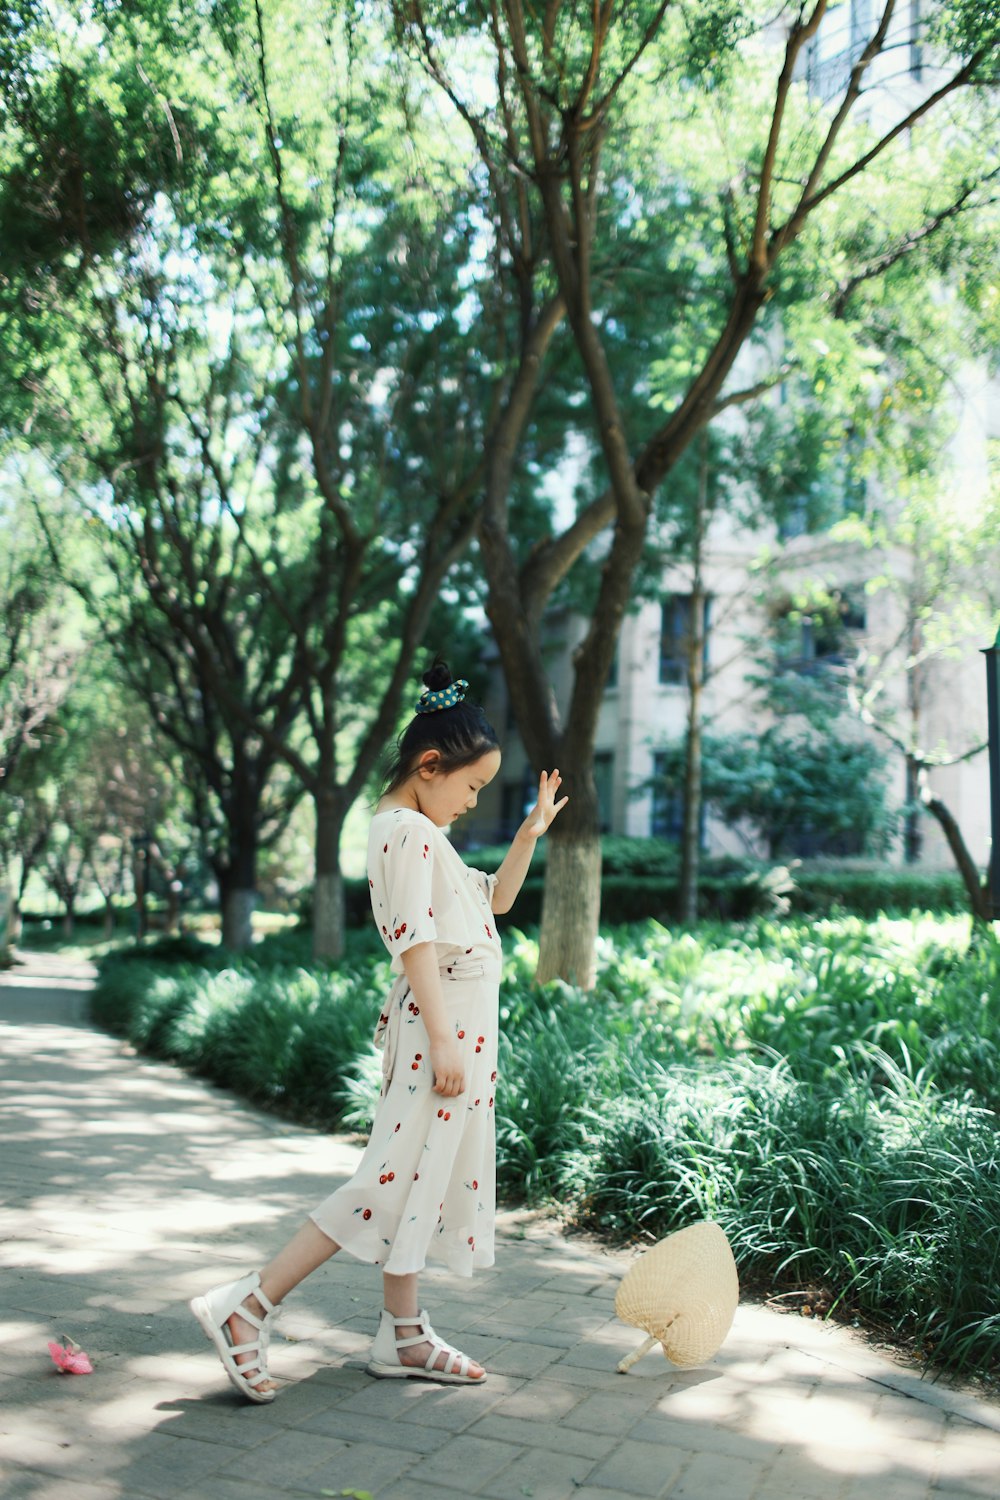 a woman in a white dress walking down a sidewalk